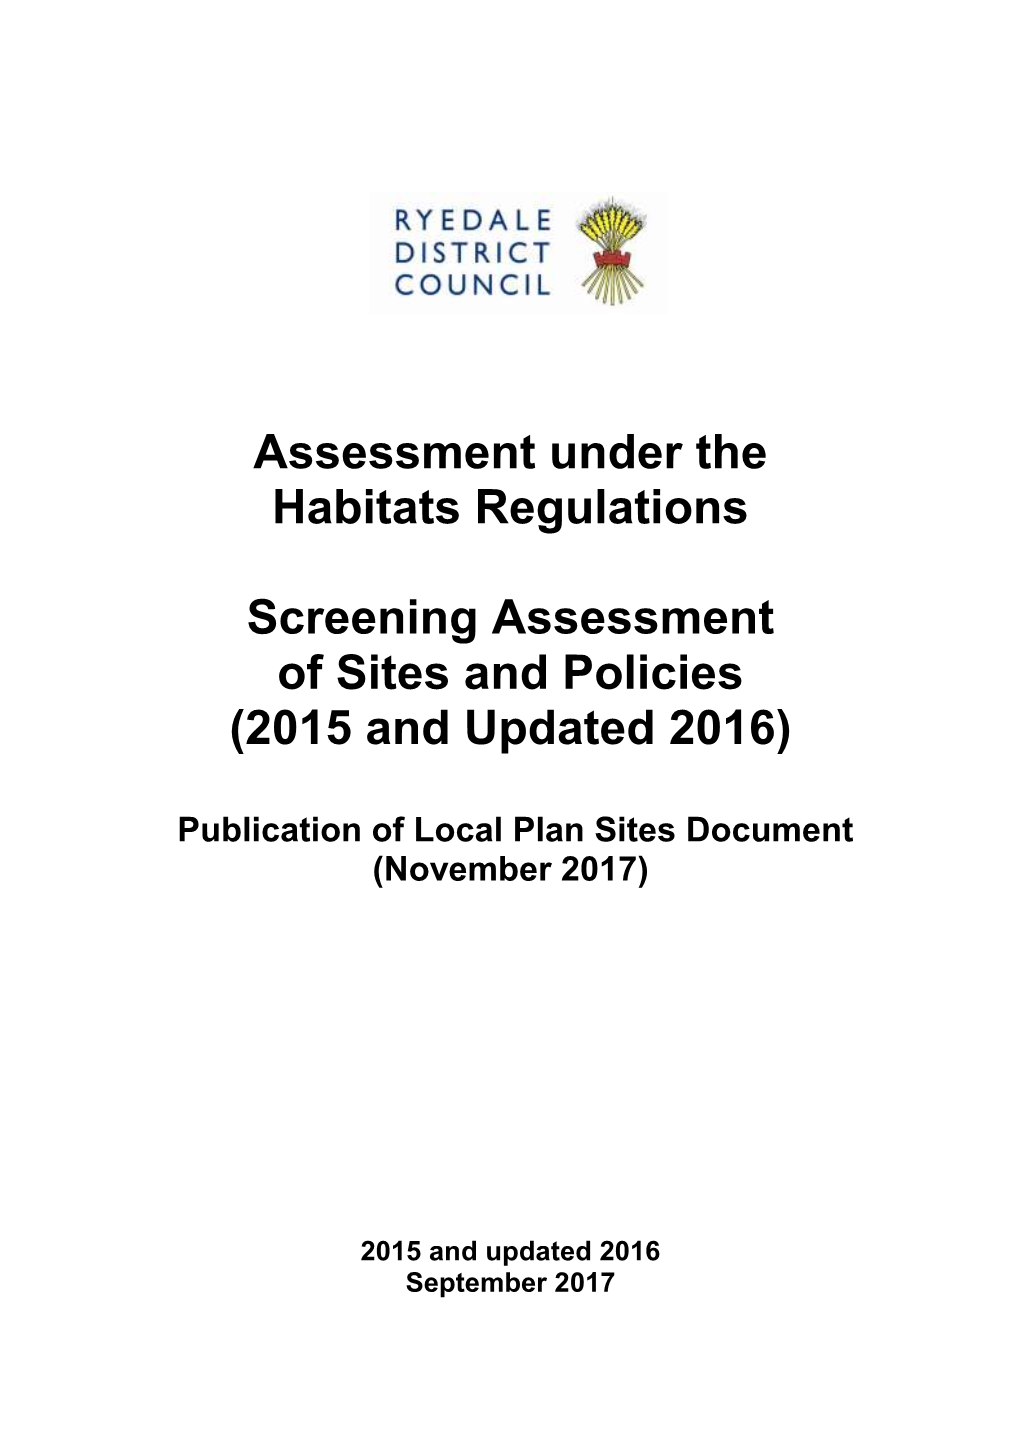 Assessment Under the Habitats Regulations Screening Assessment